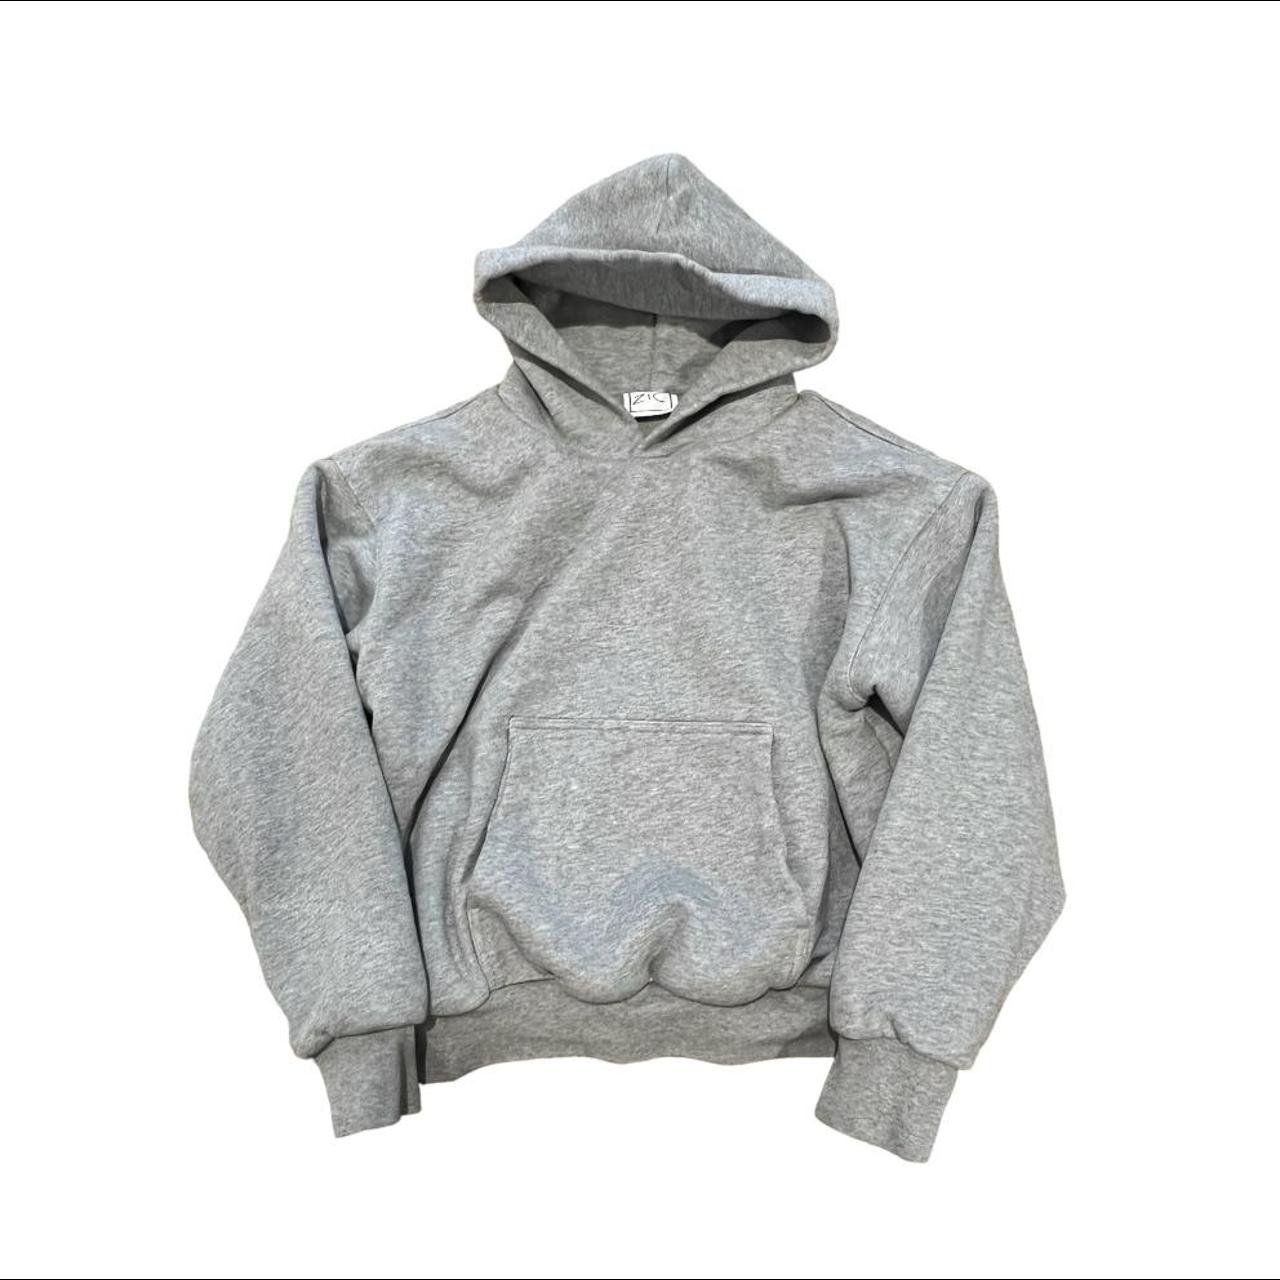 zic made grey hoodie 100% heavyweight cotton/ 500... - Depop